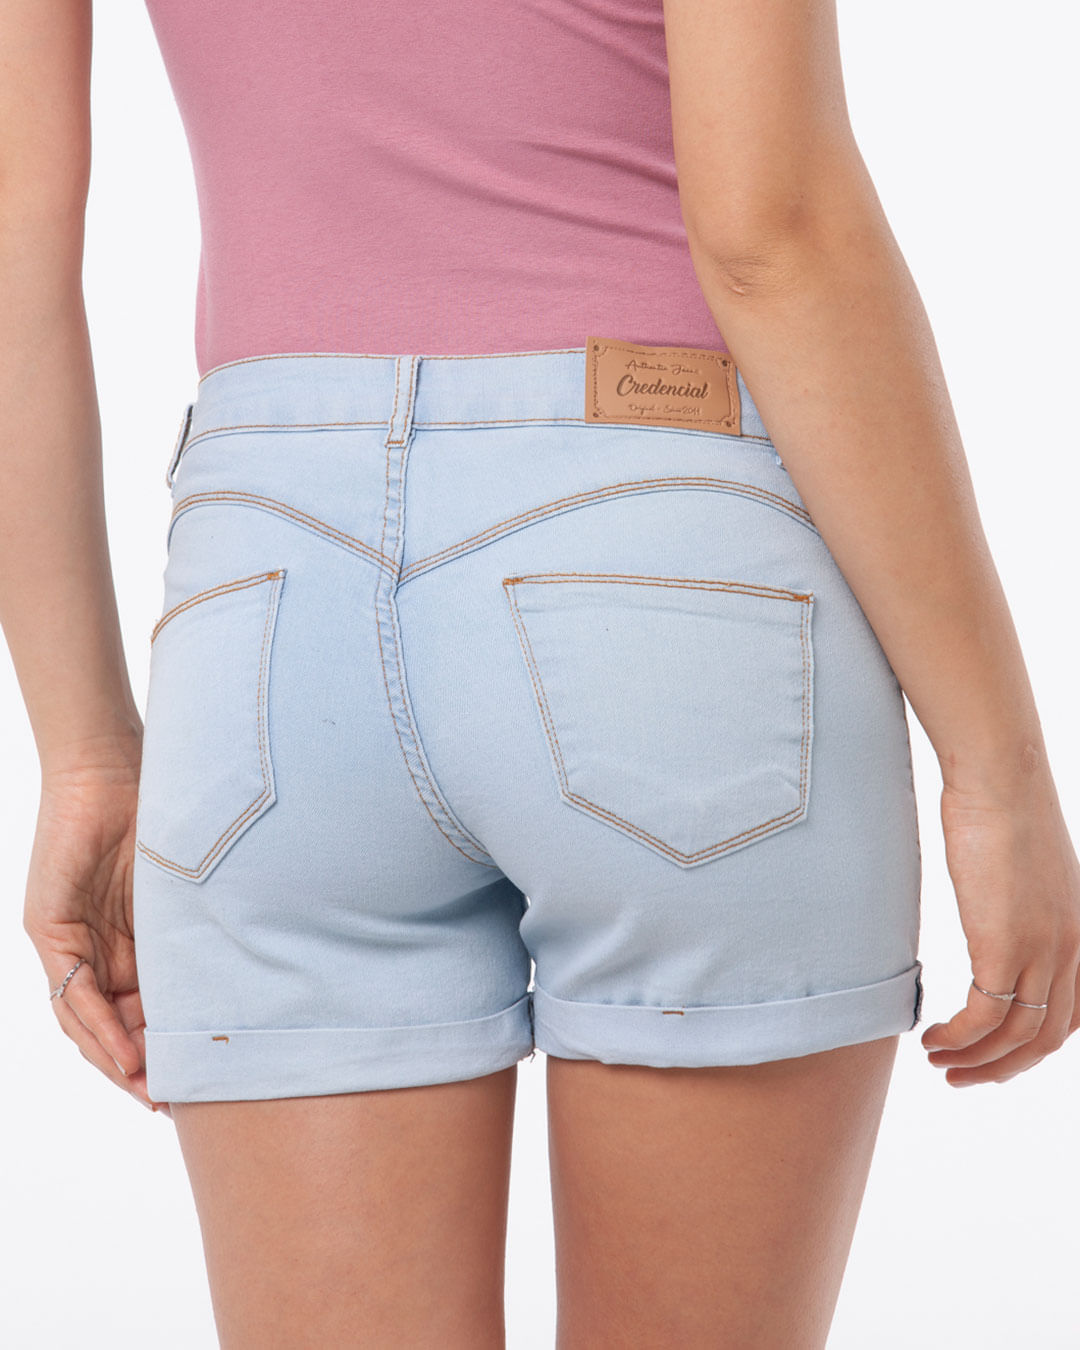 Short-Jeans-Feminino-Barra-Dobrada-Azul-Claro